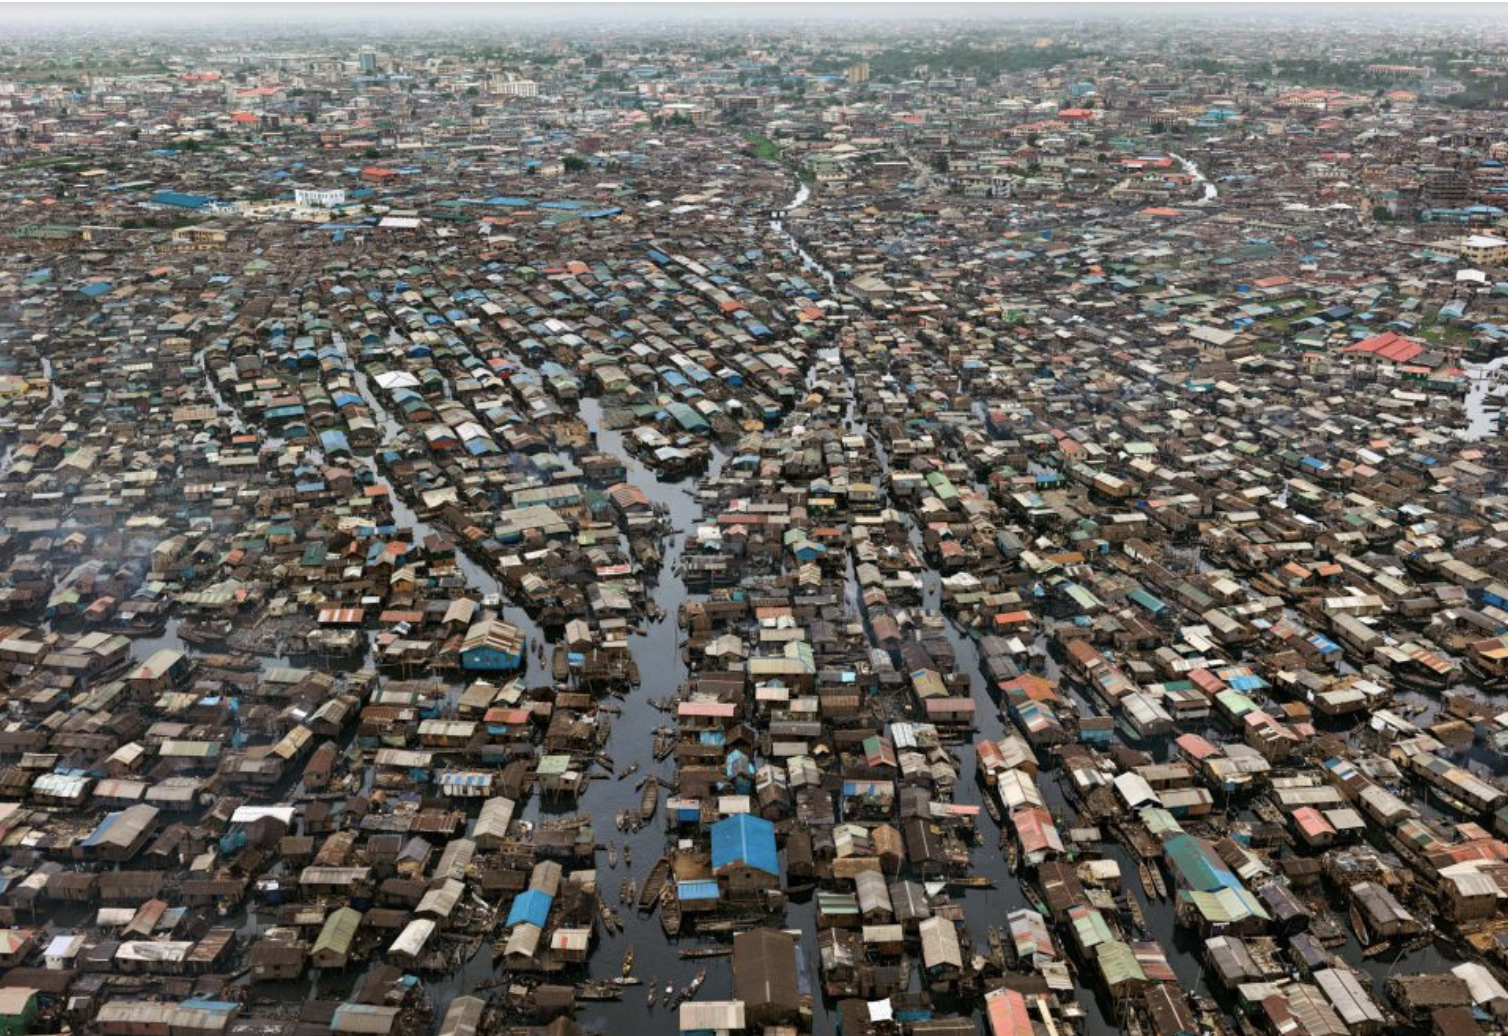 Edward Burtynsky's 'Anthropocene' photos capture the effect of the